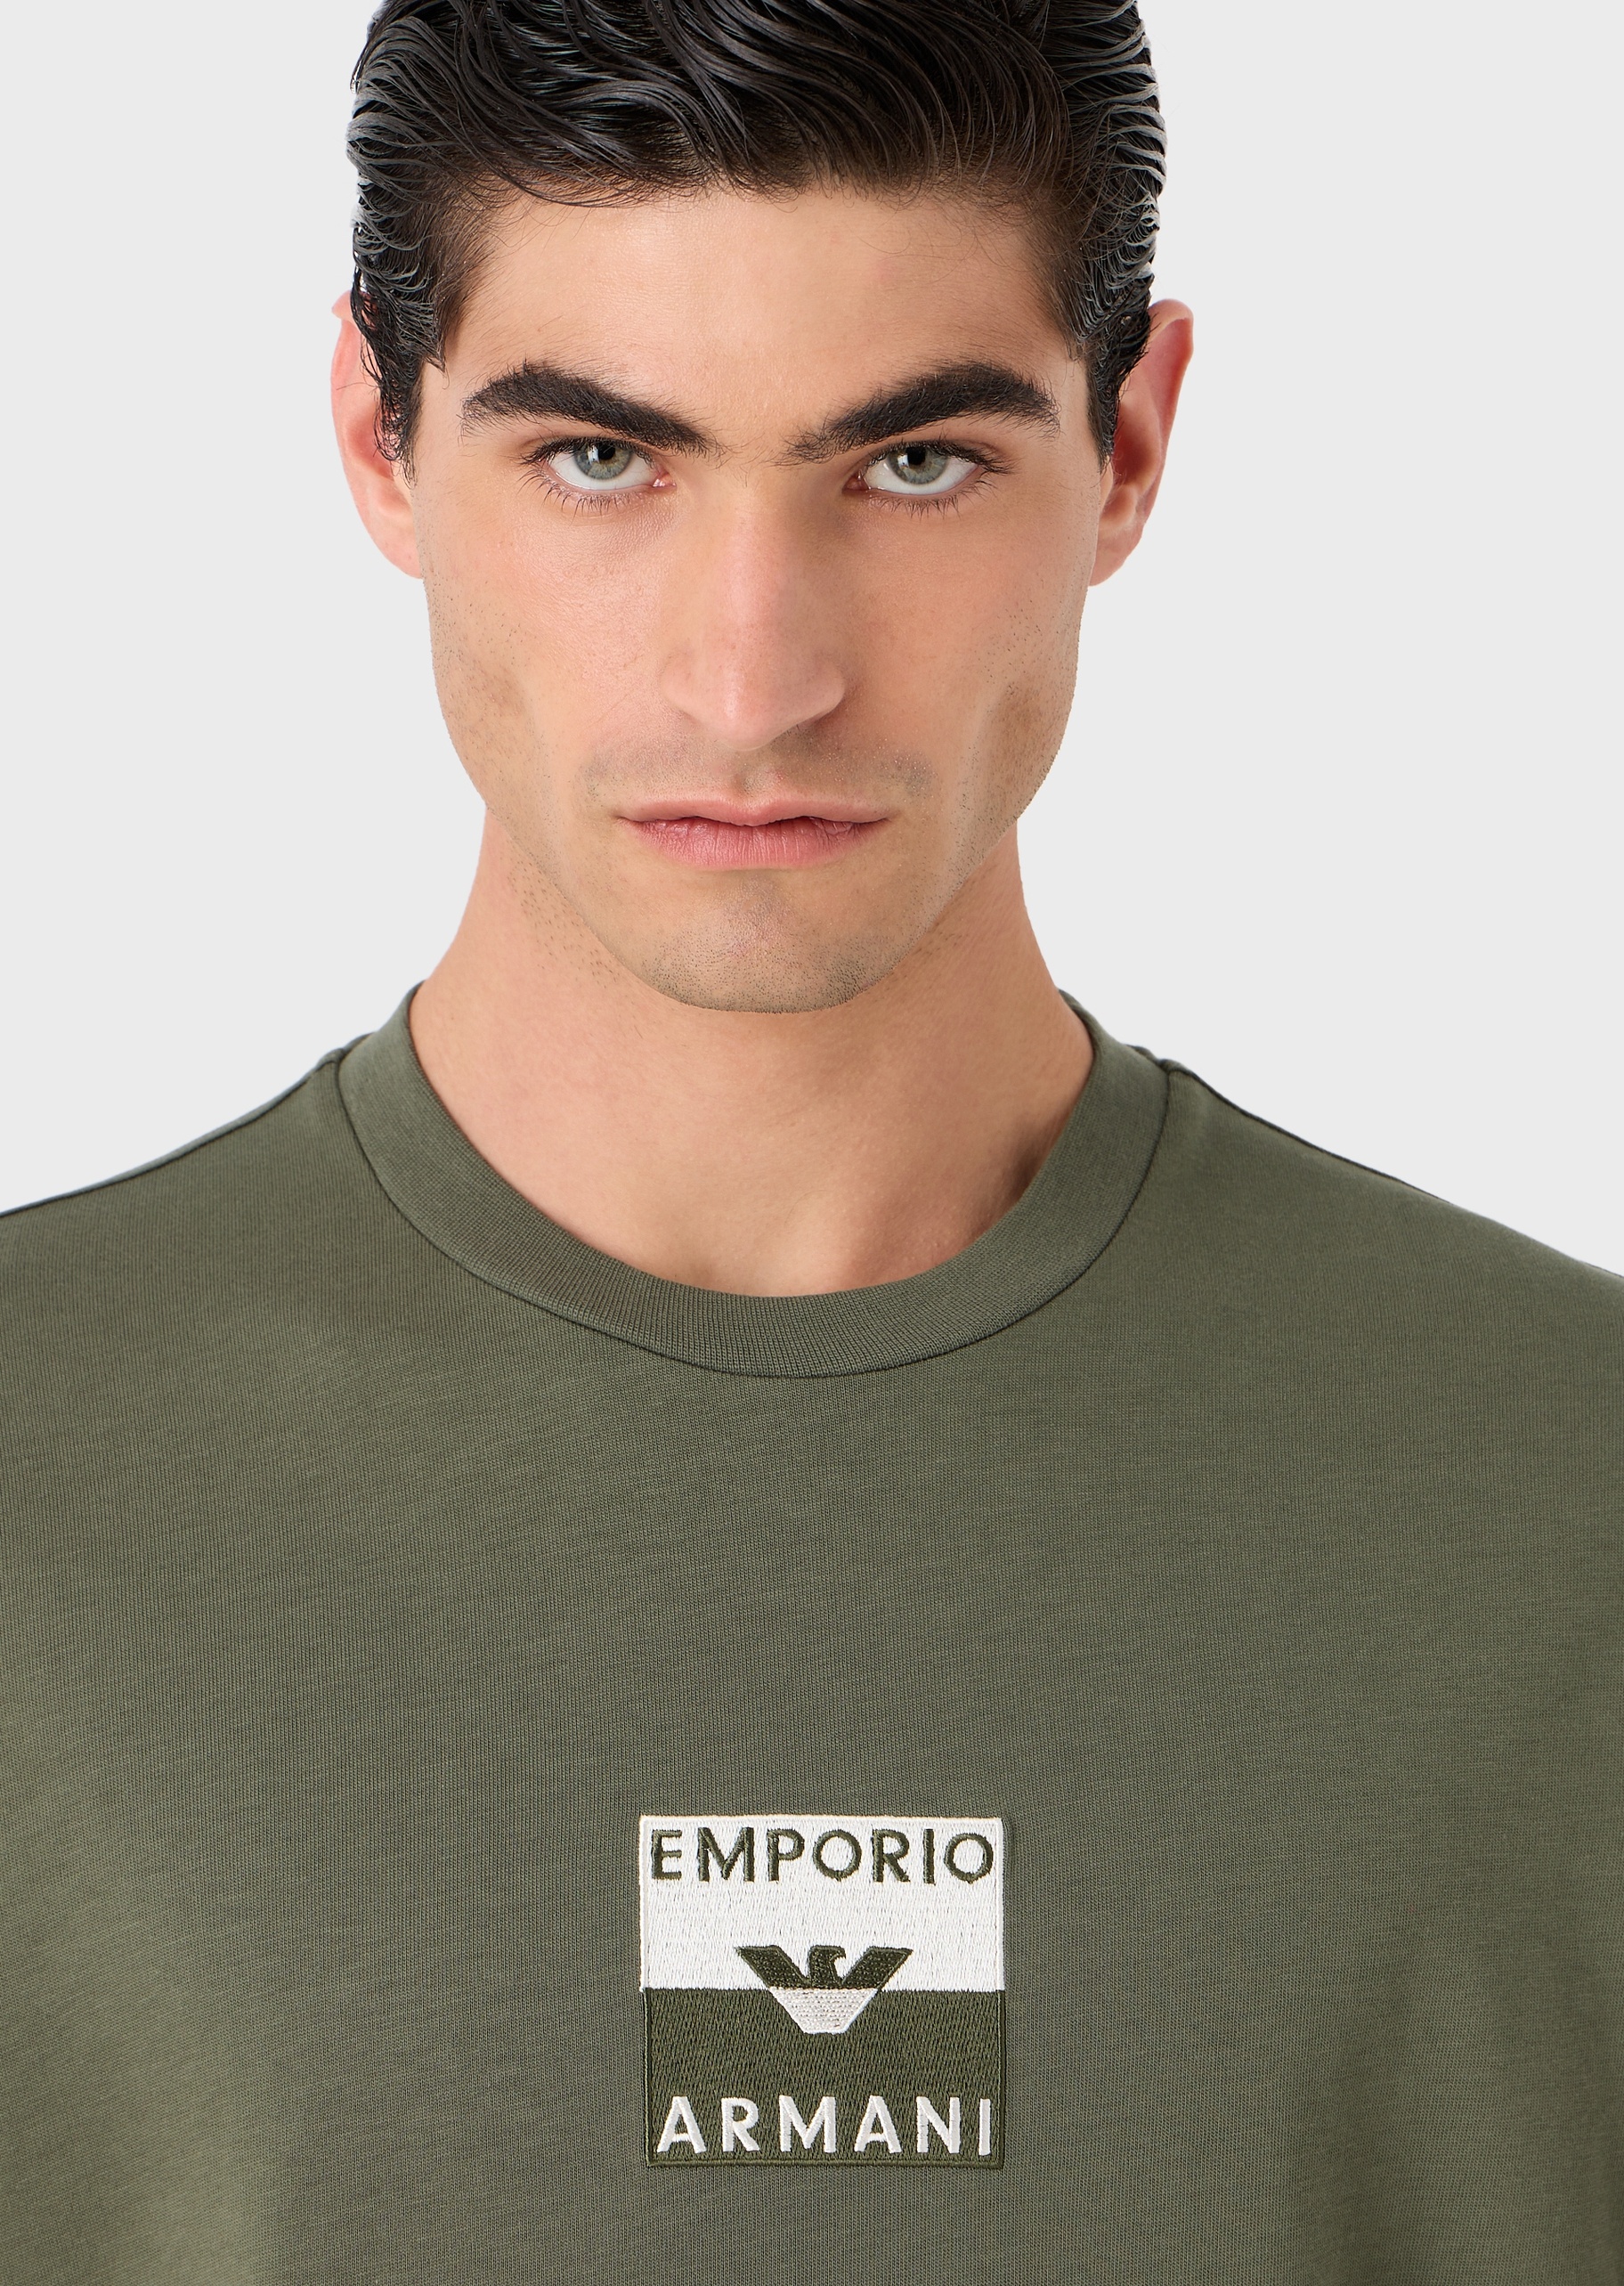 Emporio Armani 双色盒形刺绣棉质T恤